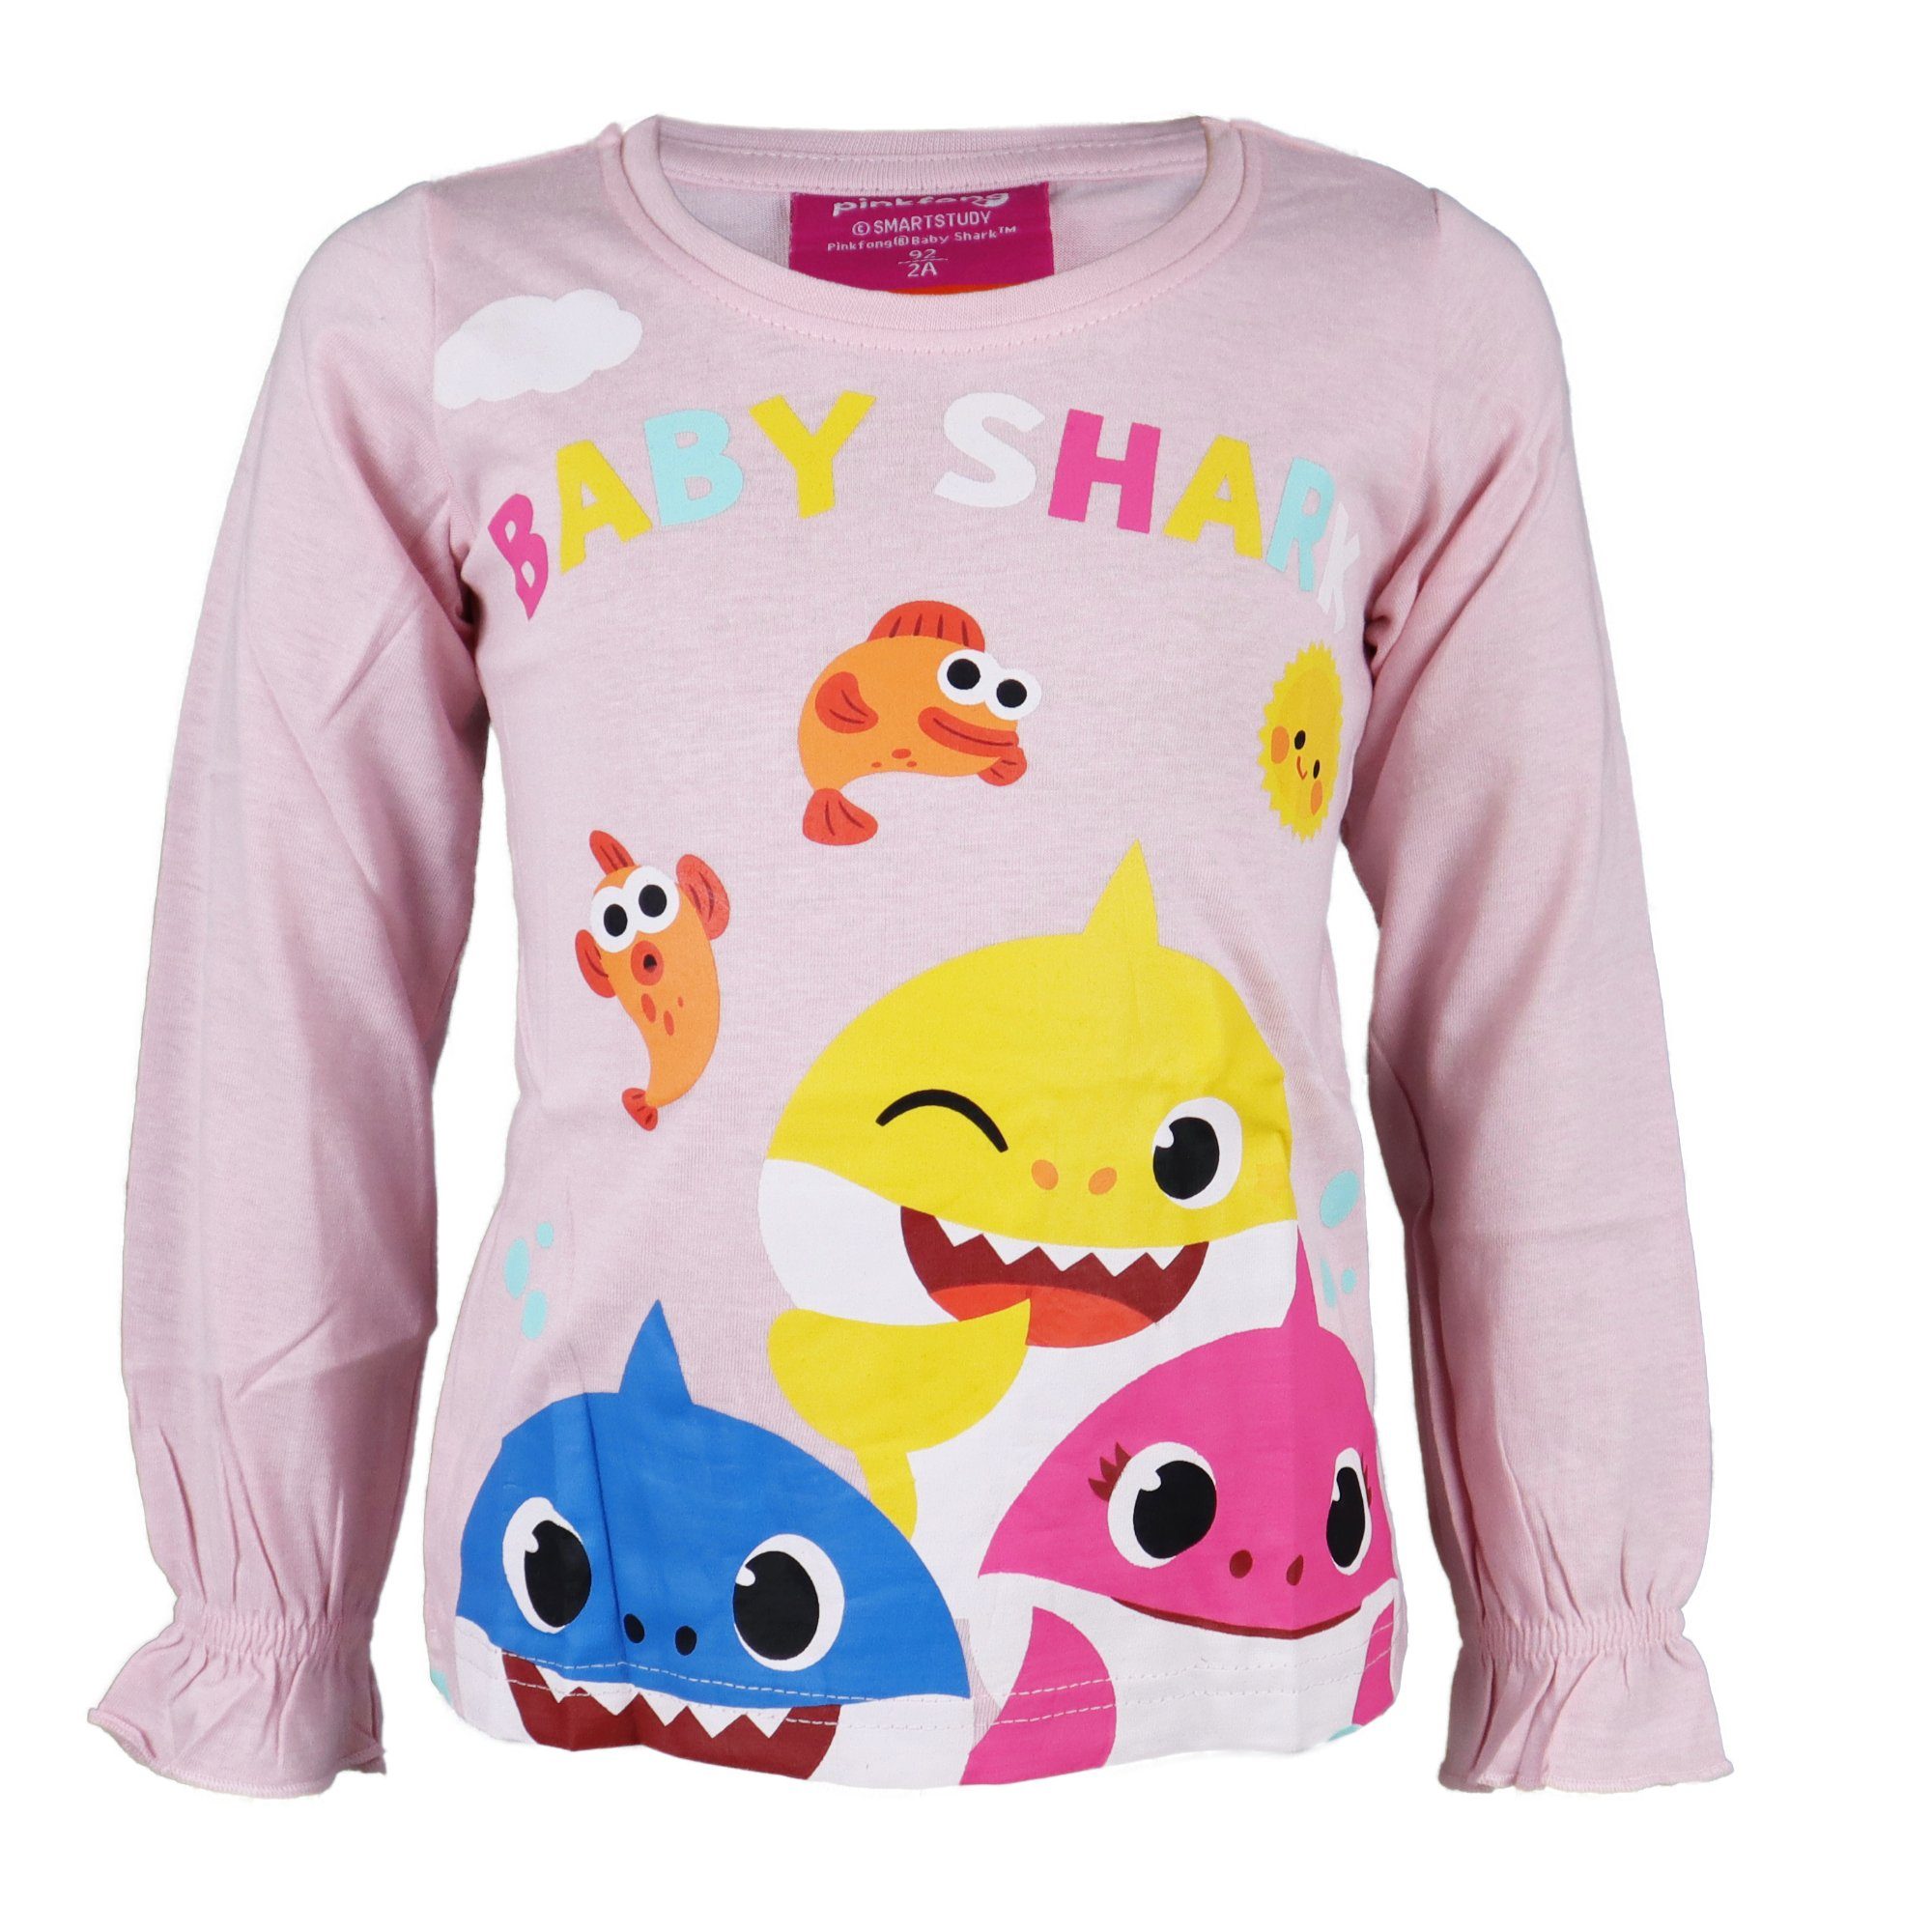 EplusM Langarmshirt Shark Kinder 116, Mädchen Baumwolle, Baby oder Gr. Blau 92 bis Rosa Pink langarm Shirt